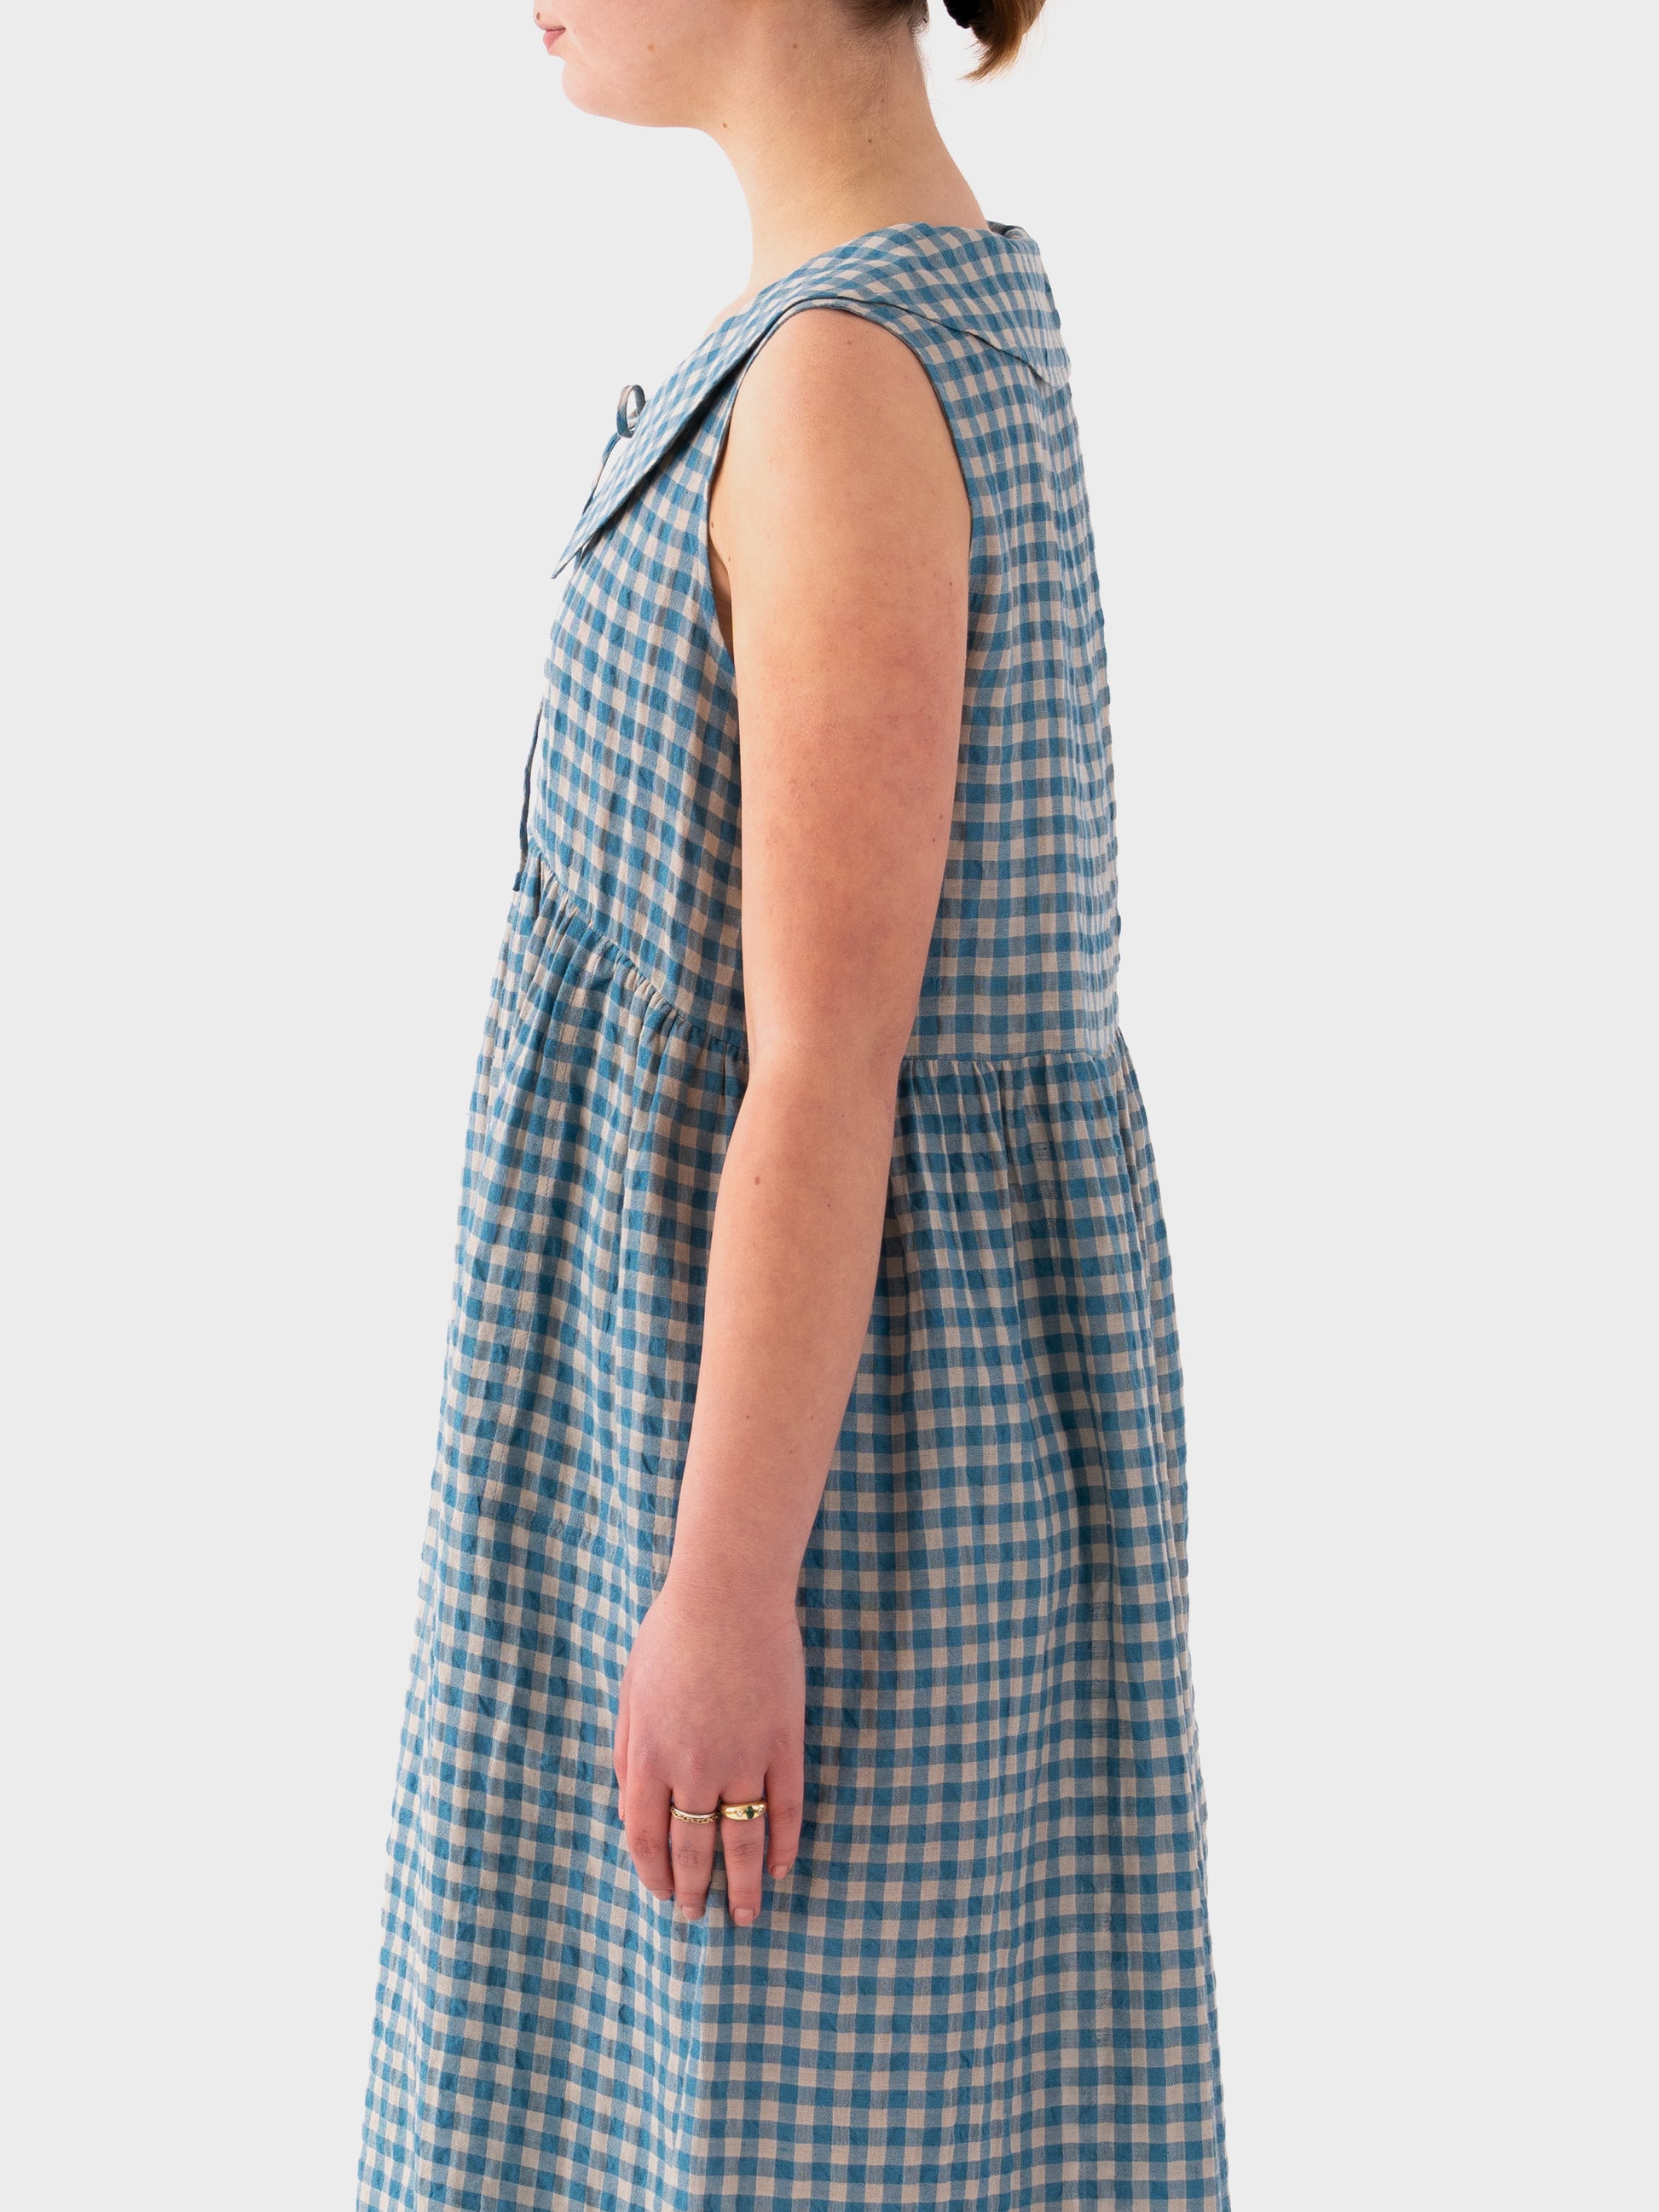 Sideline Nancy Dress - Blue Check